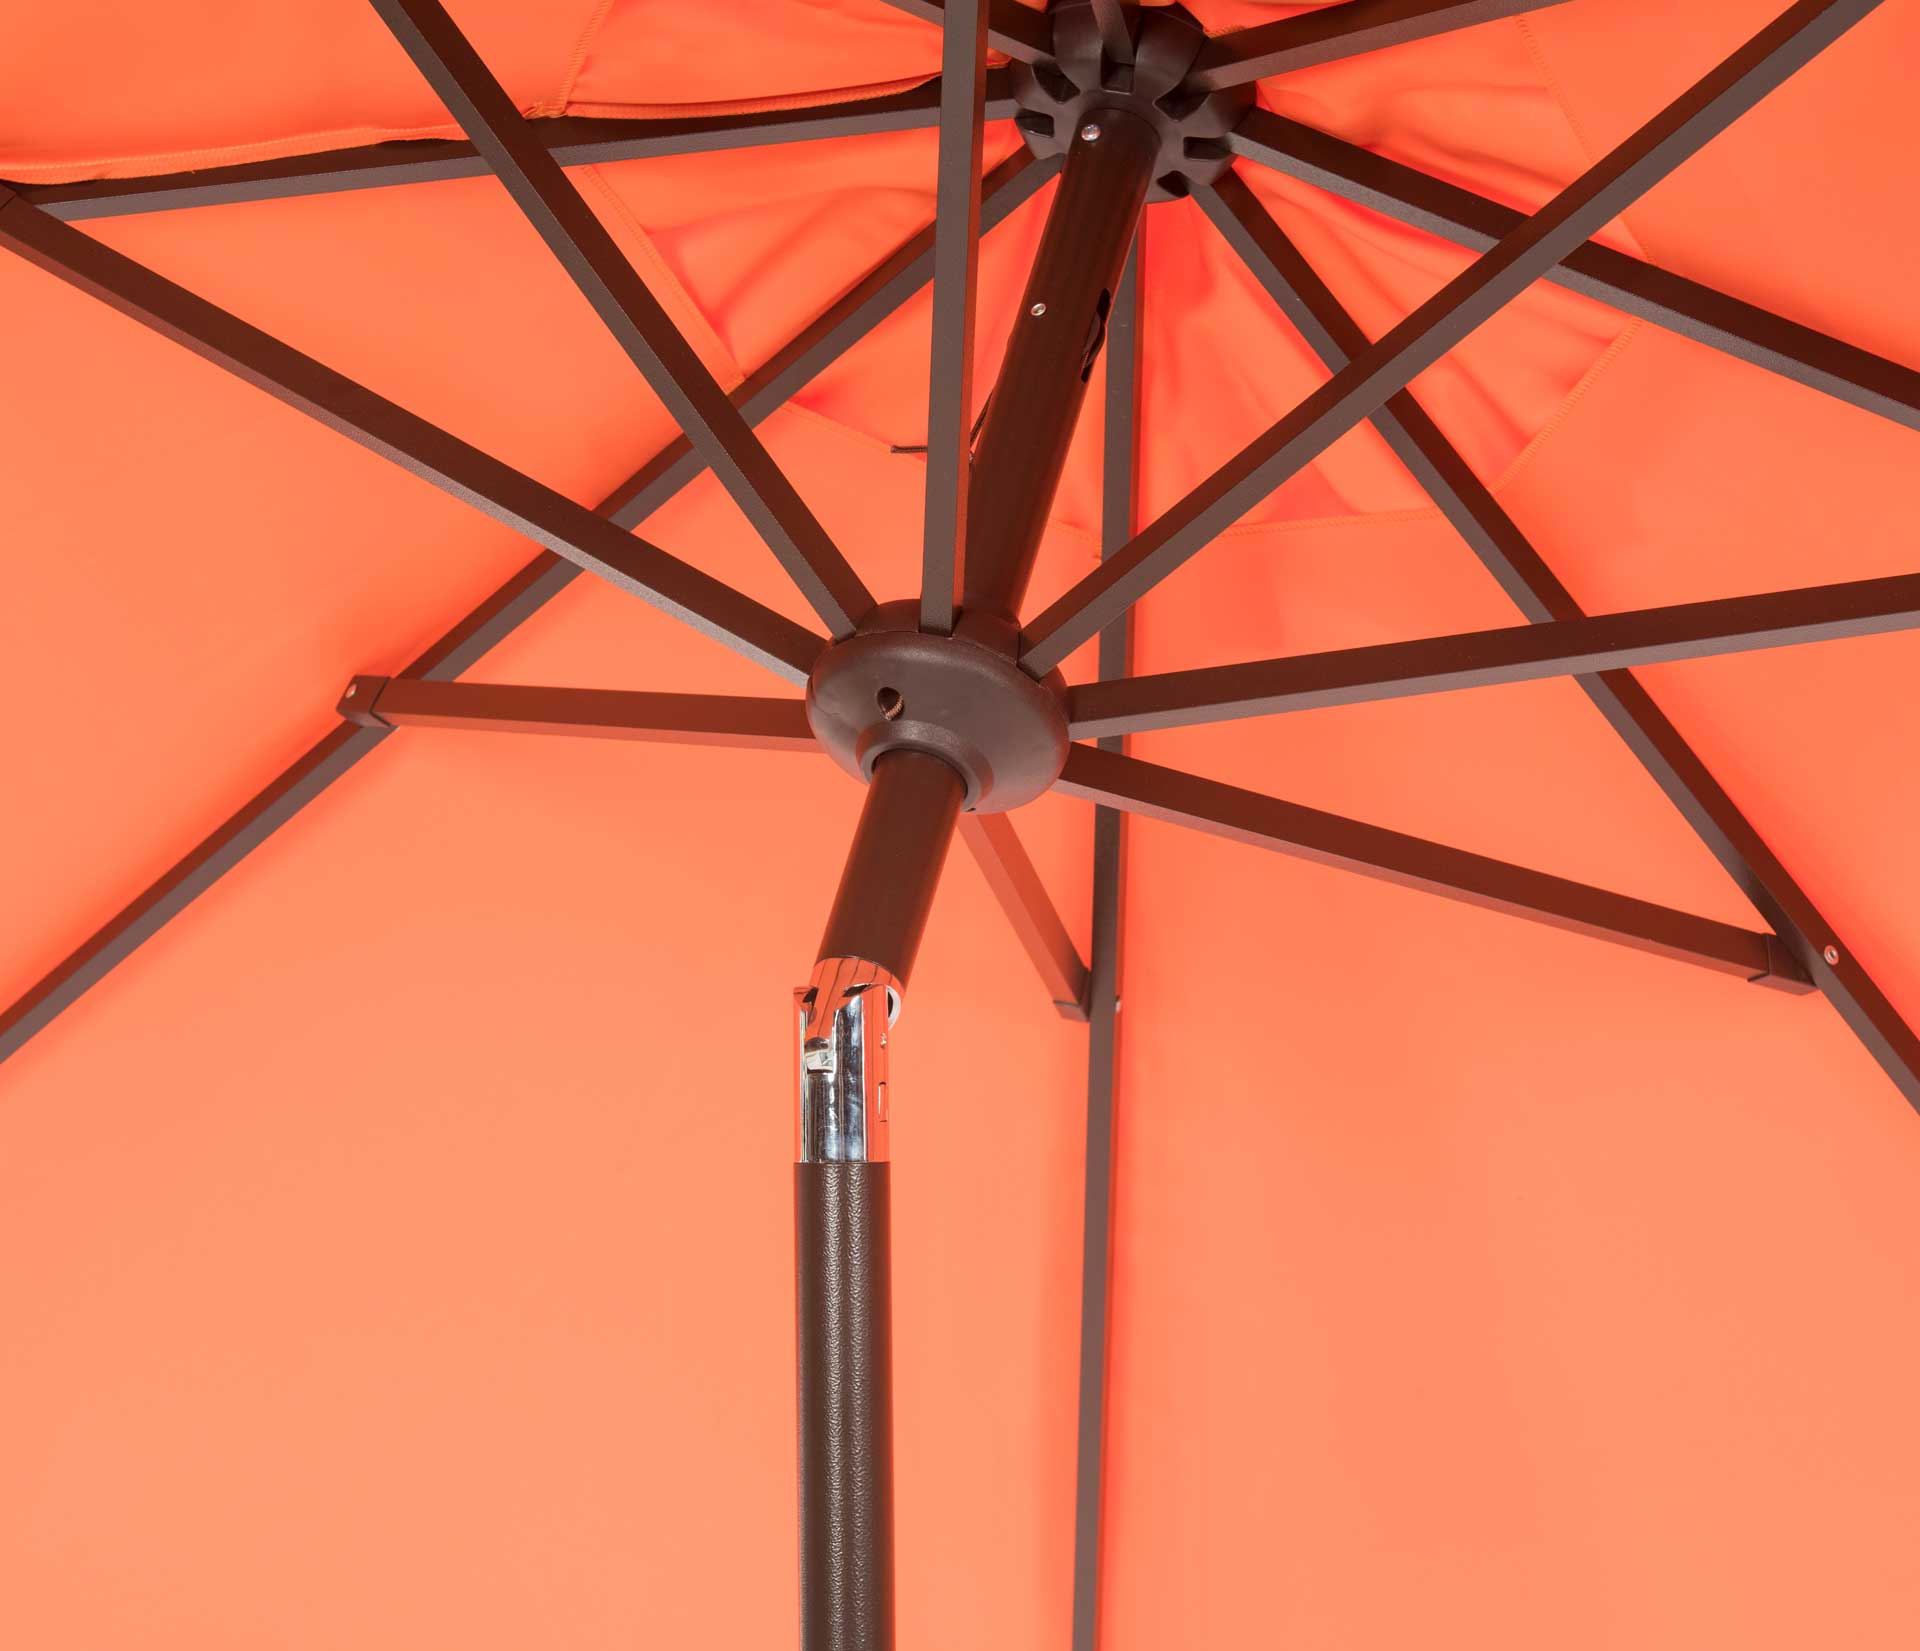 Zinnia Uv Resistant Push Button Tilt Umbrella Orange/White